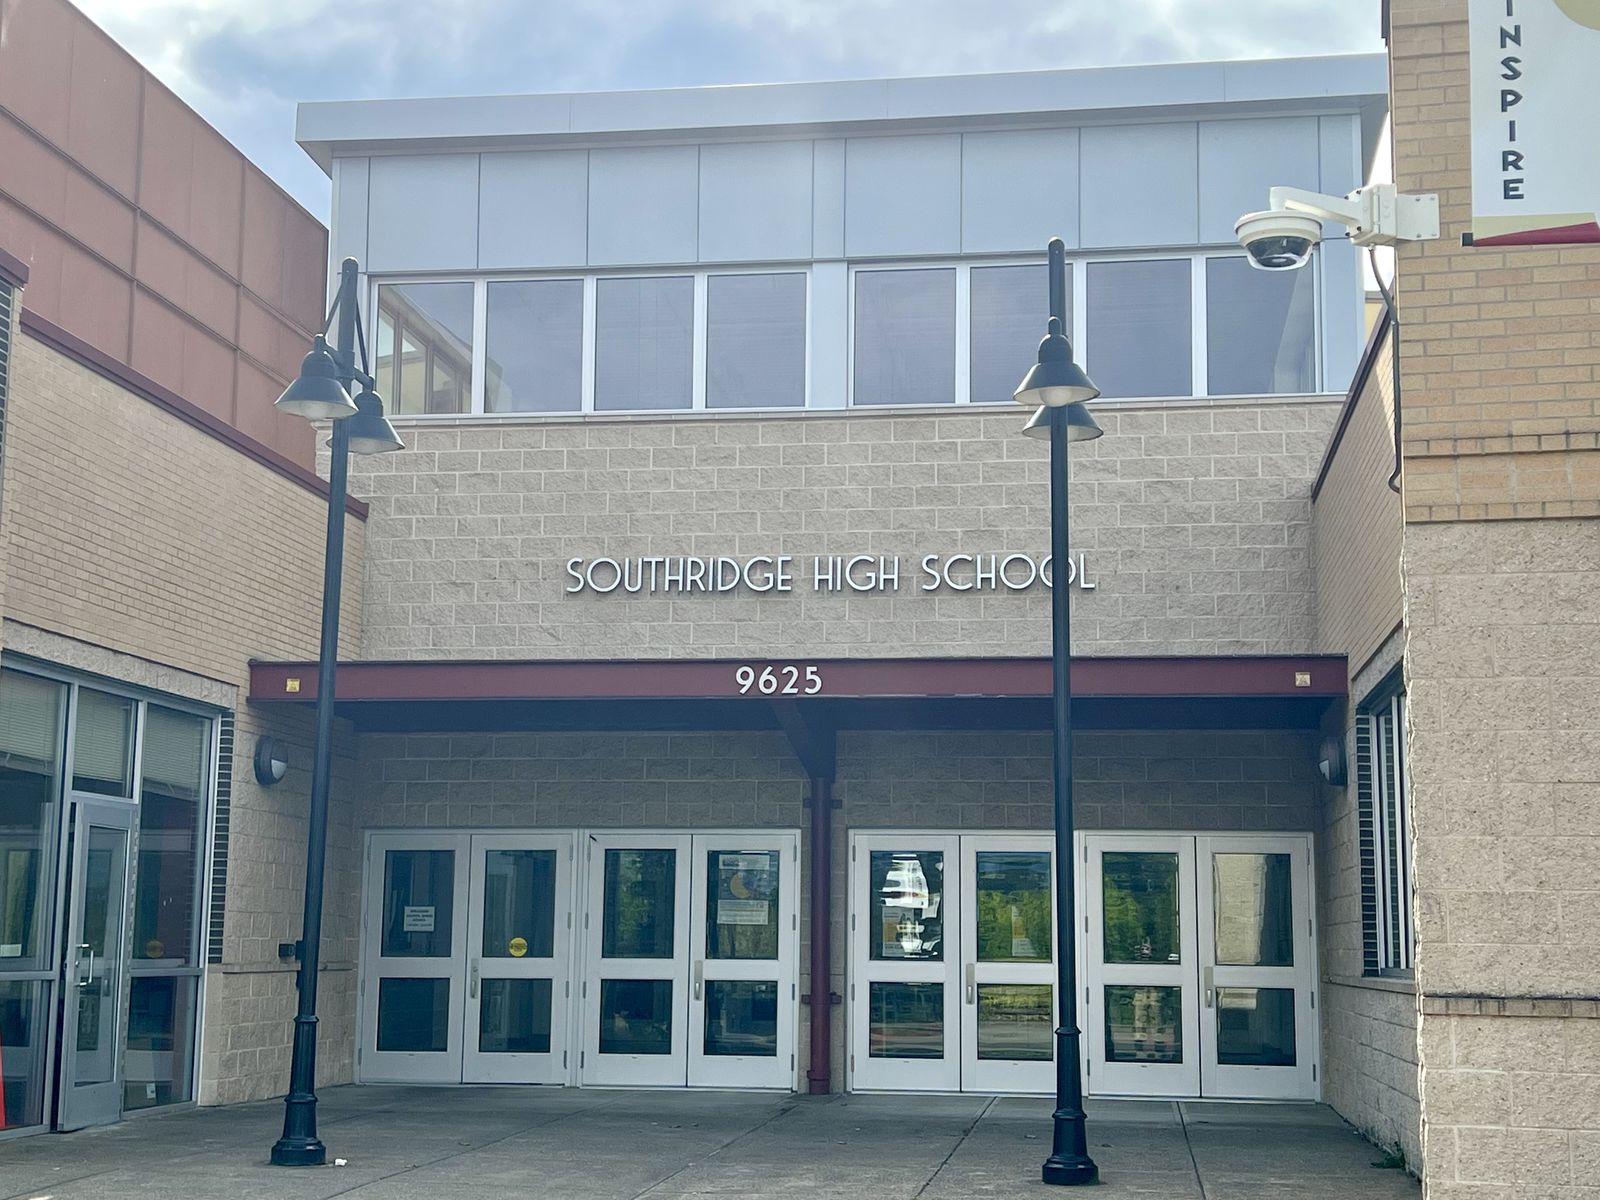 Southridge High School in Beaverton is shown here.